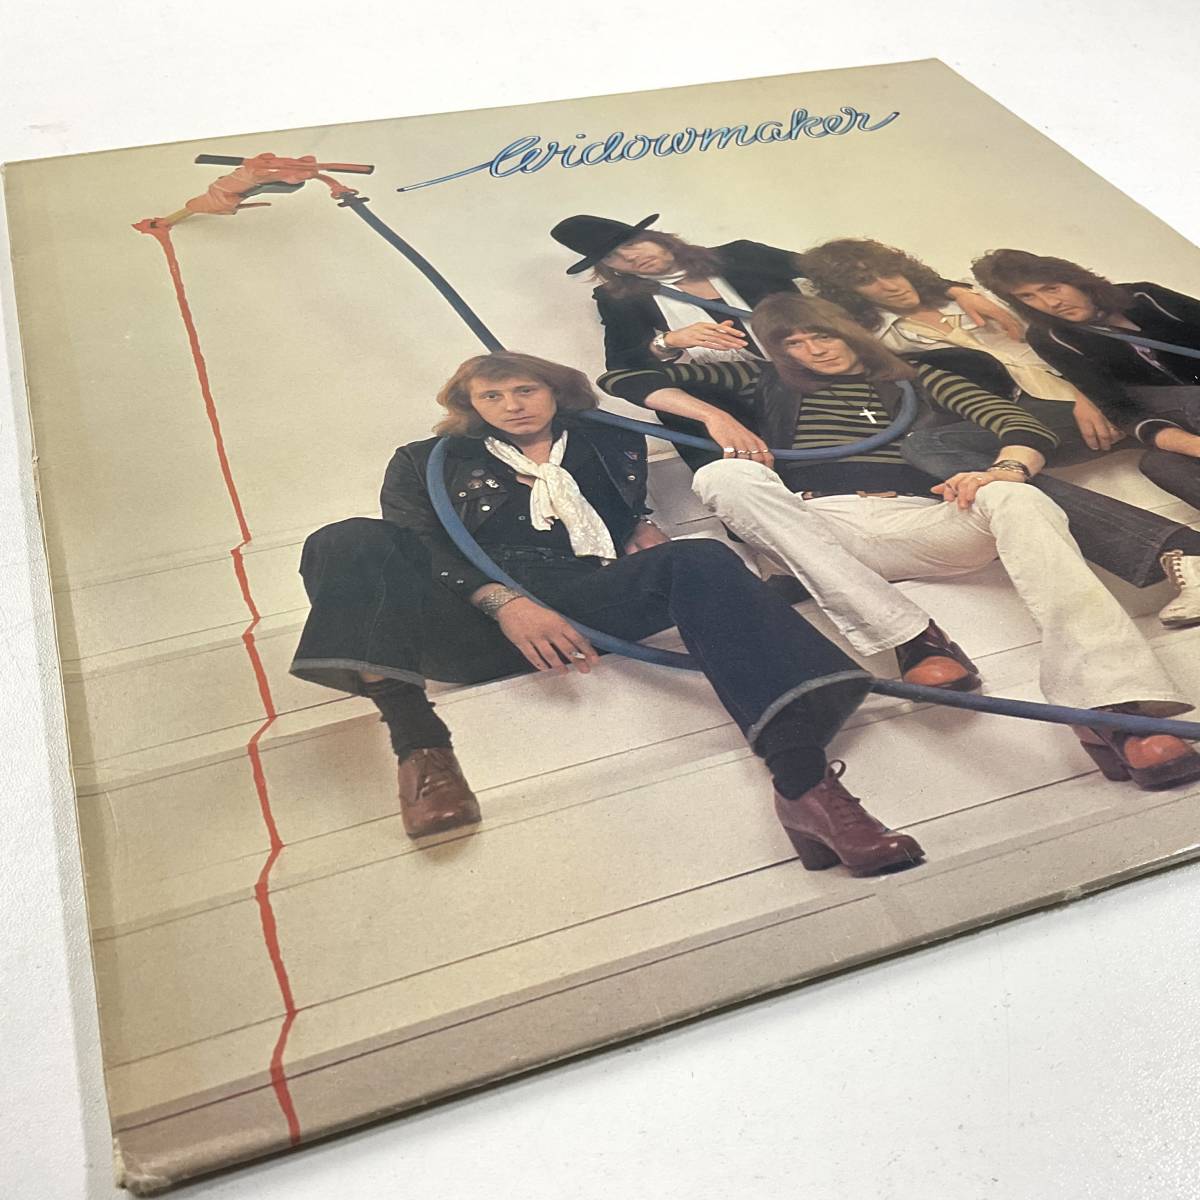 1976 UK Original WIDOW MAKER WidowmakerJet Records JET LP 15 英国 オリジナル レコード LP コンディション良好 傷ナシ 美盤_画像7